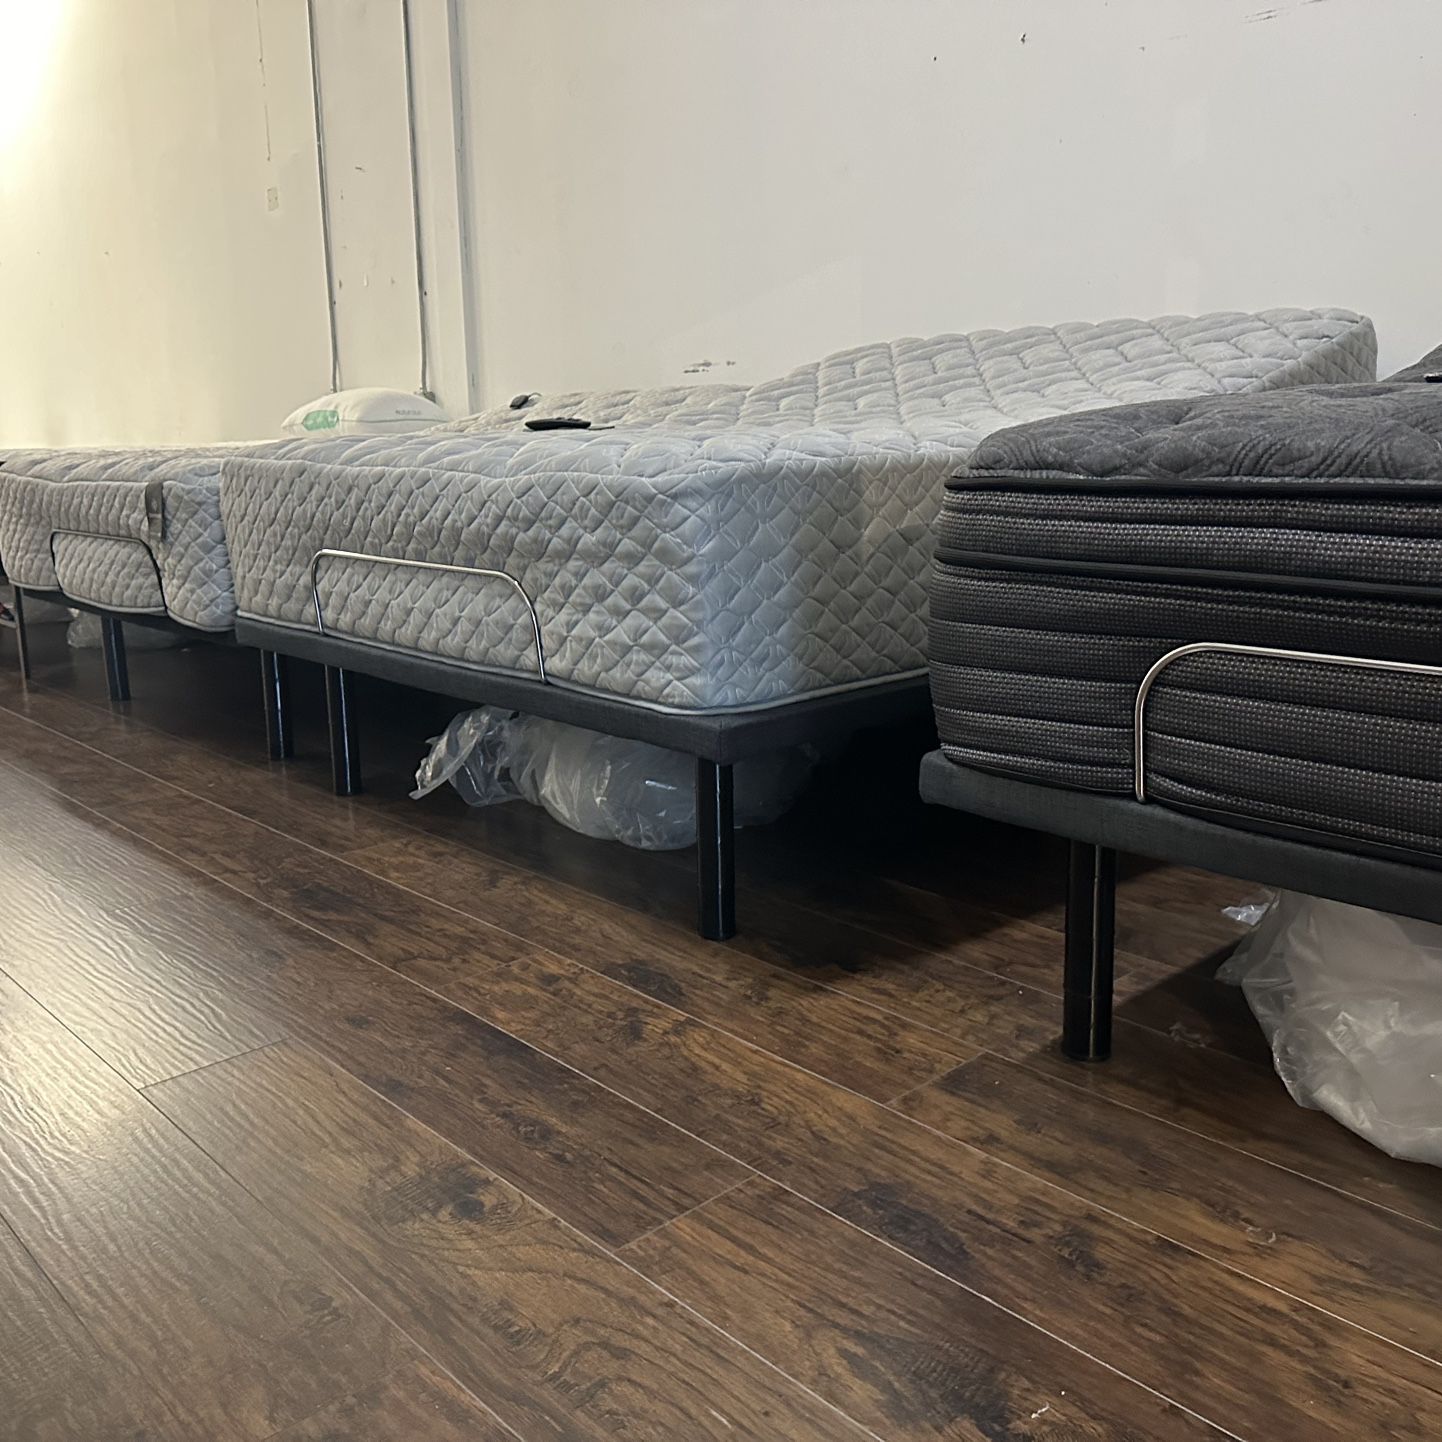 Warehouse full of pillowtop mattresses! Need them gone ASAP!